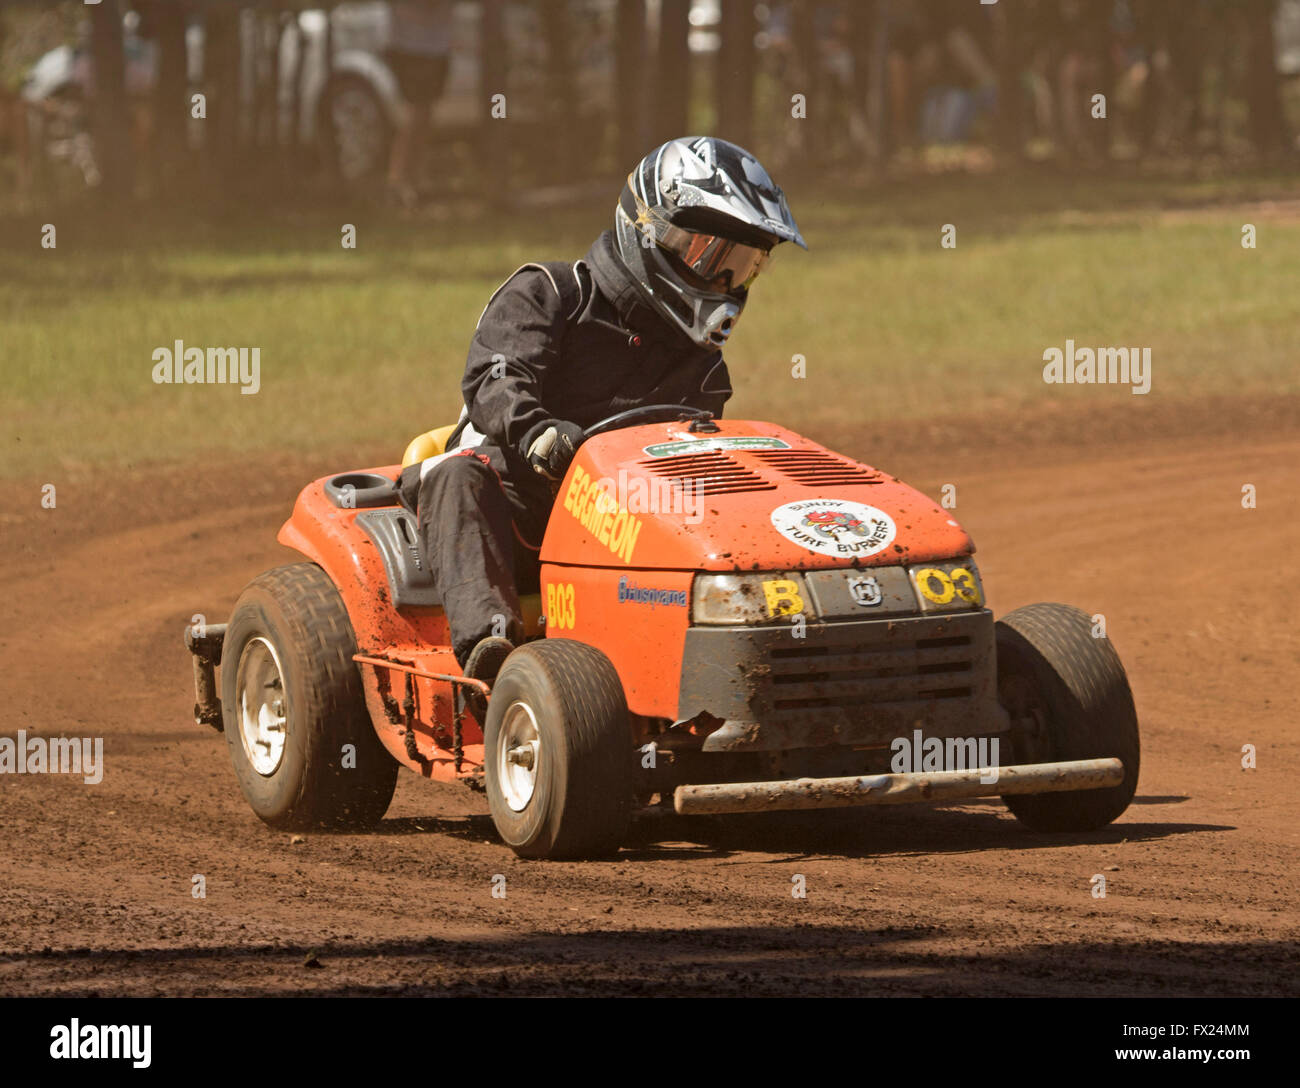 Man, dark helmet & overalls, driving bright orange Husqvarna motor mower on dusty track in unusual Australian motor racing sport Stock Photo